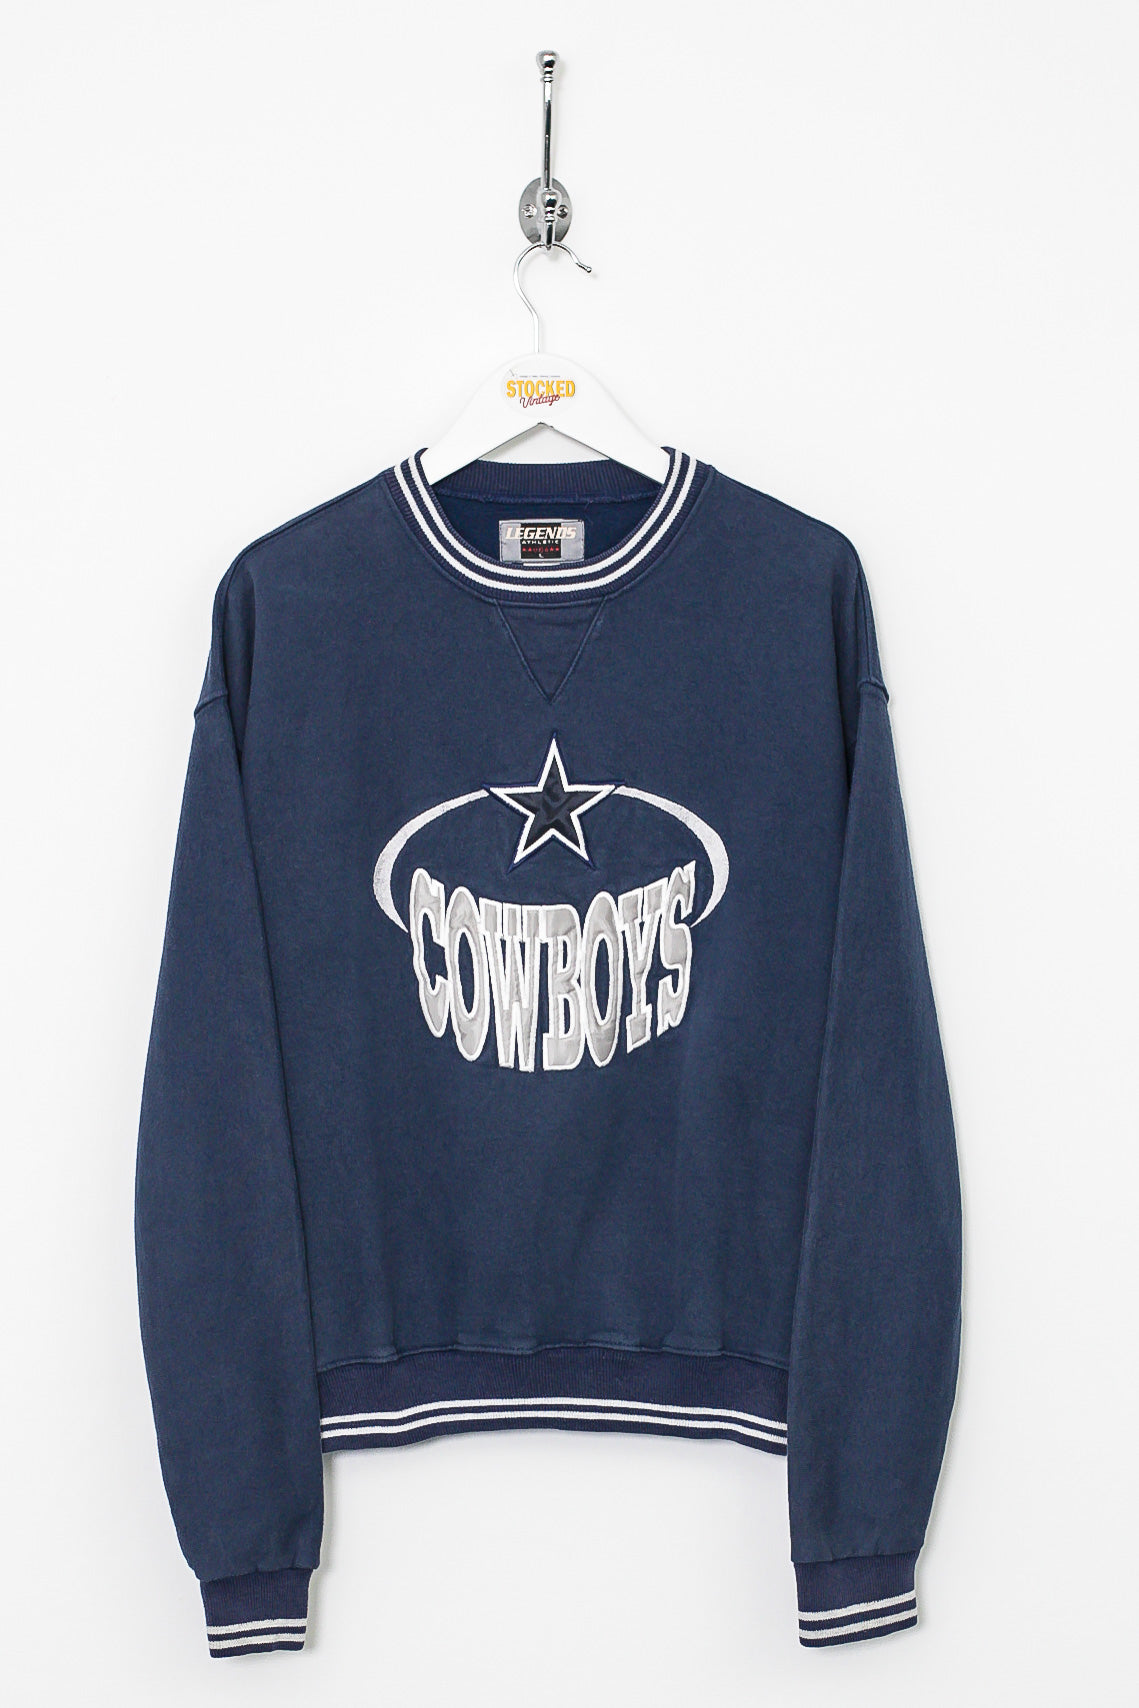 Womens 90s NFL Dallas Cowboys Sweatshirt (L)